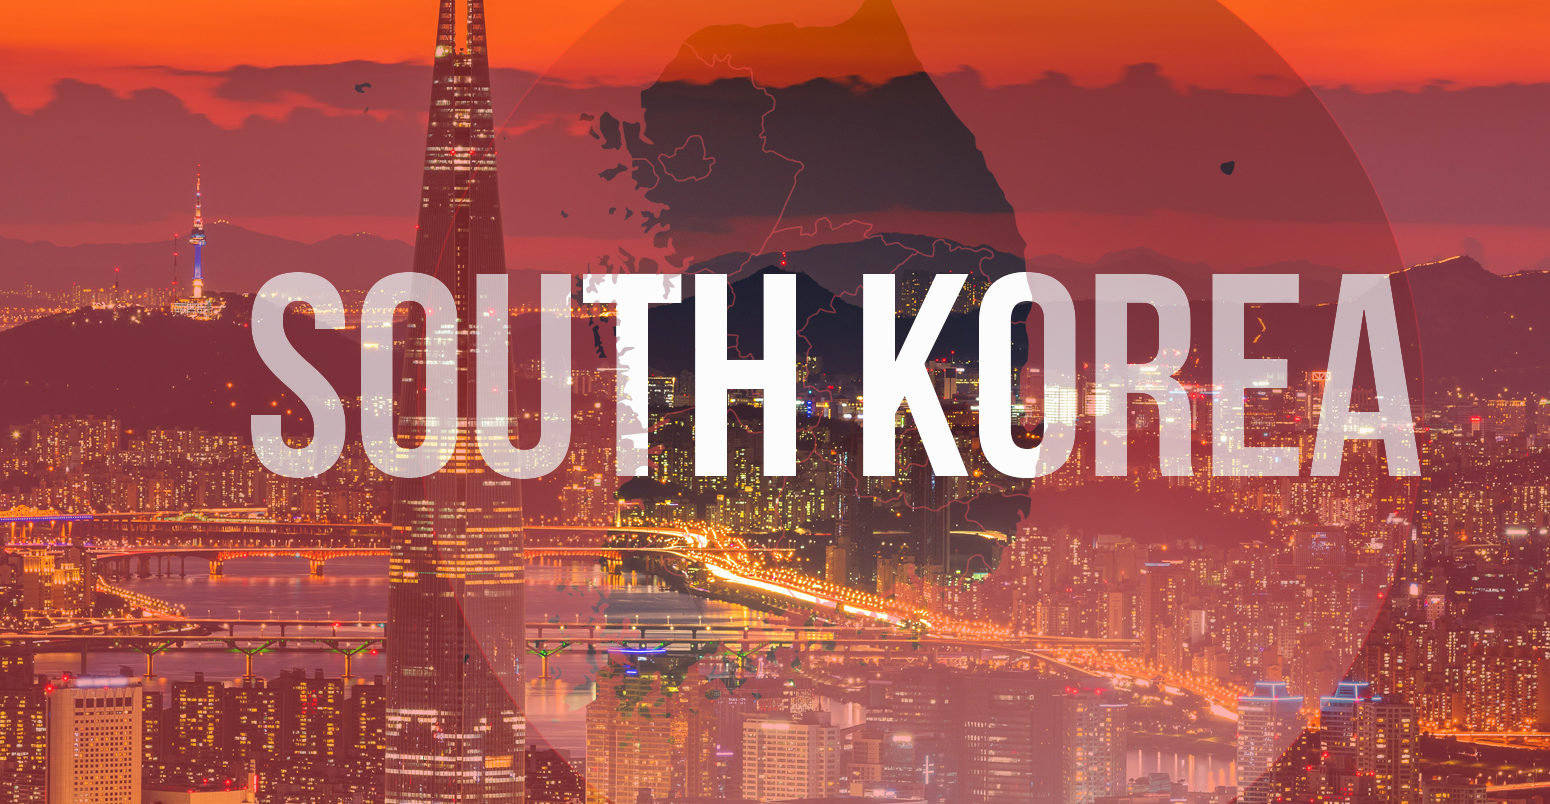 Korean visa application experience during high season